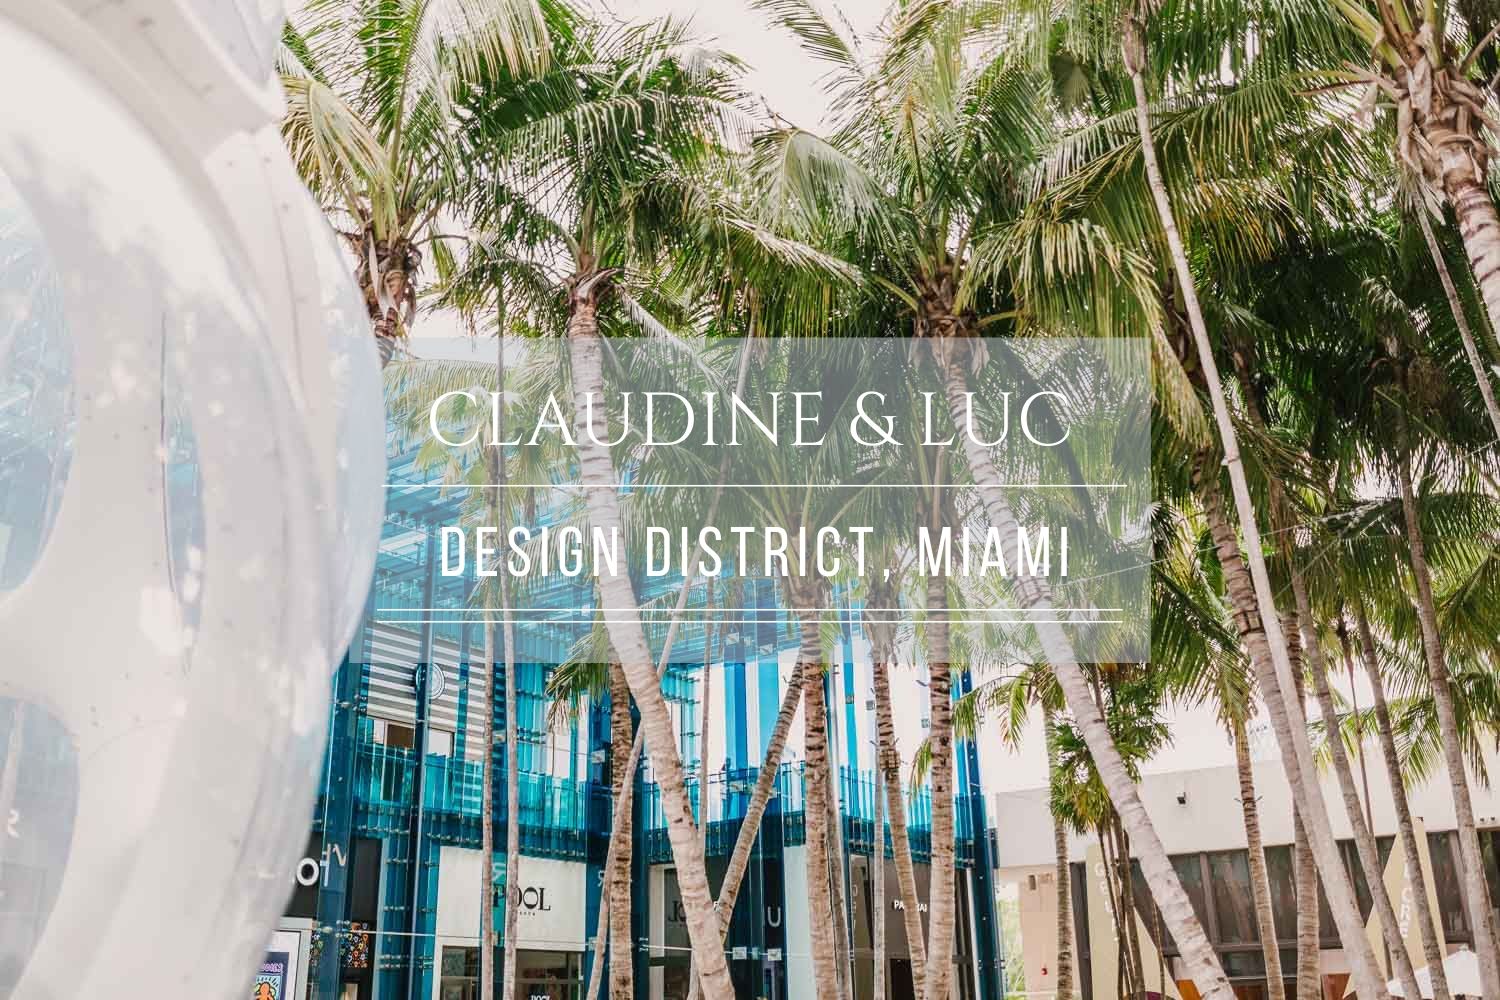 The wonderful Miami Design District engagement session 2023